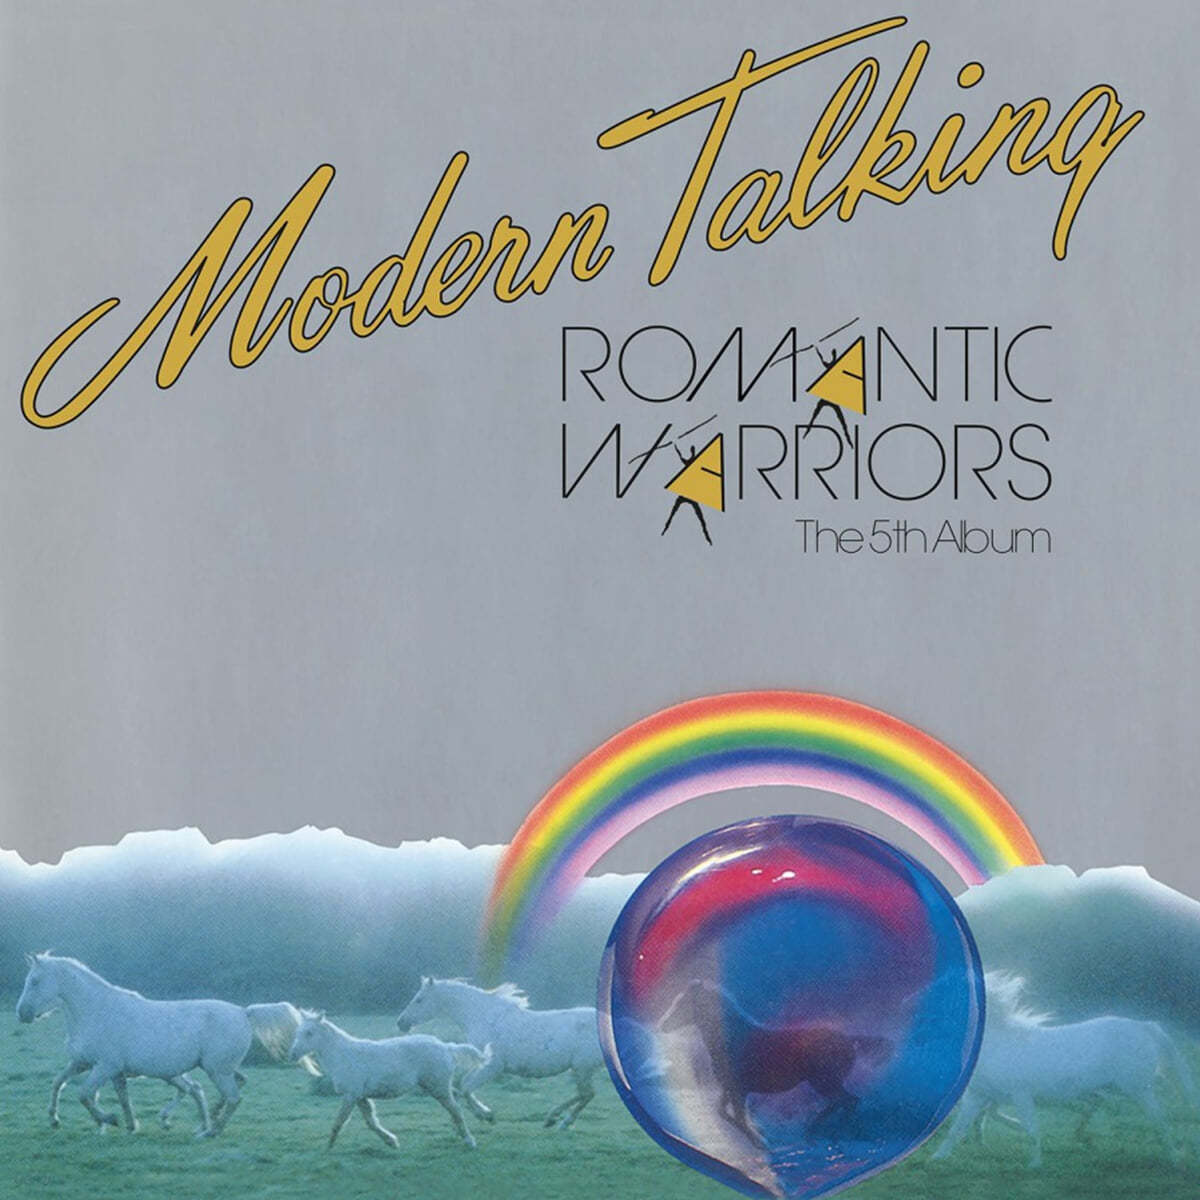 Modern Talking (모던 토킹) - Romantic Warriors [LP] 